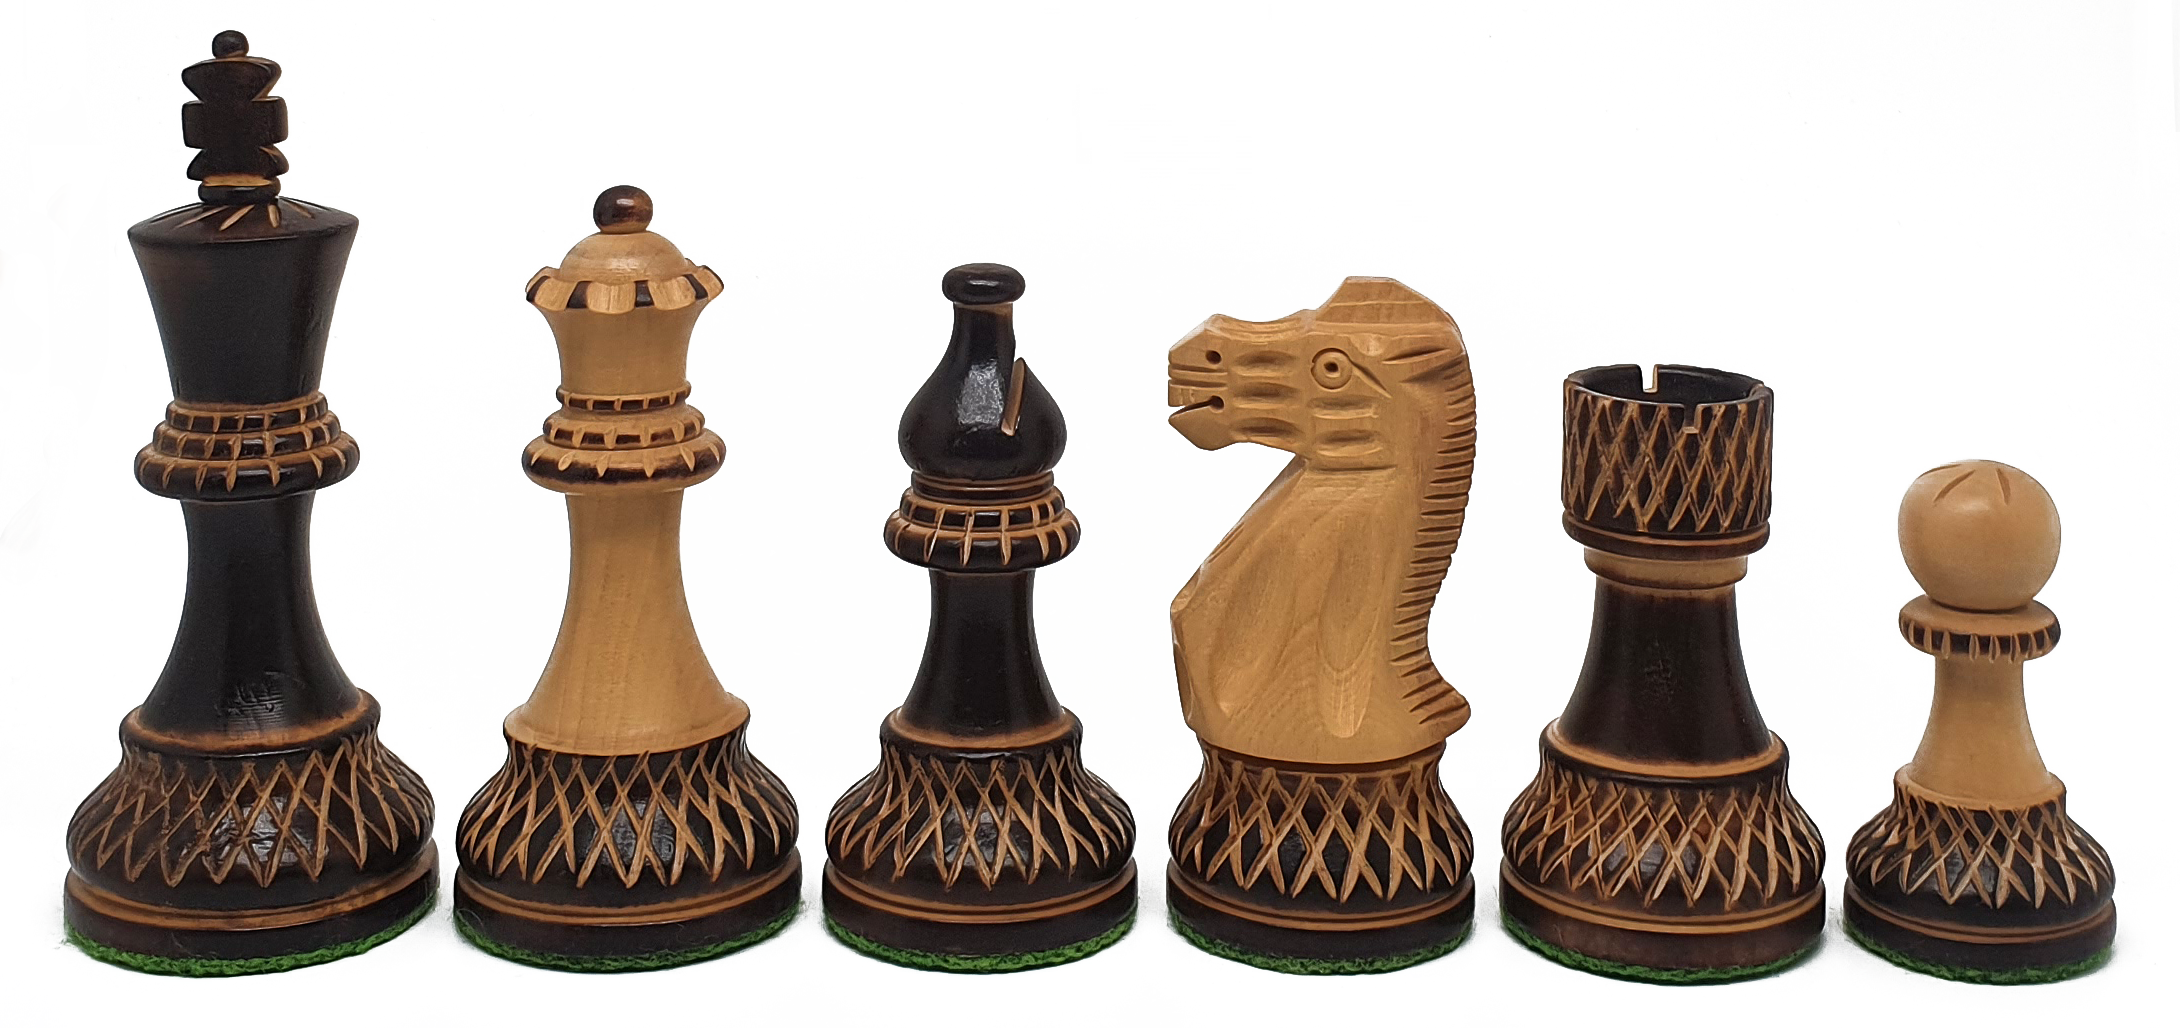 VI/ Piezas de ajedrez modelo Burnt Classic "3.75" Ebanizado. 5577